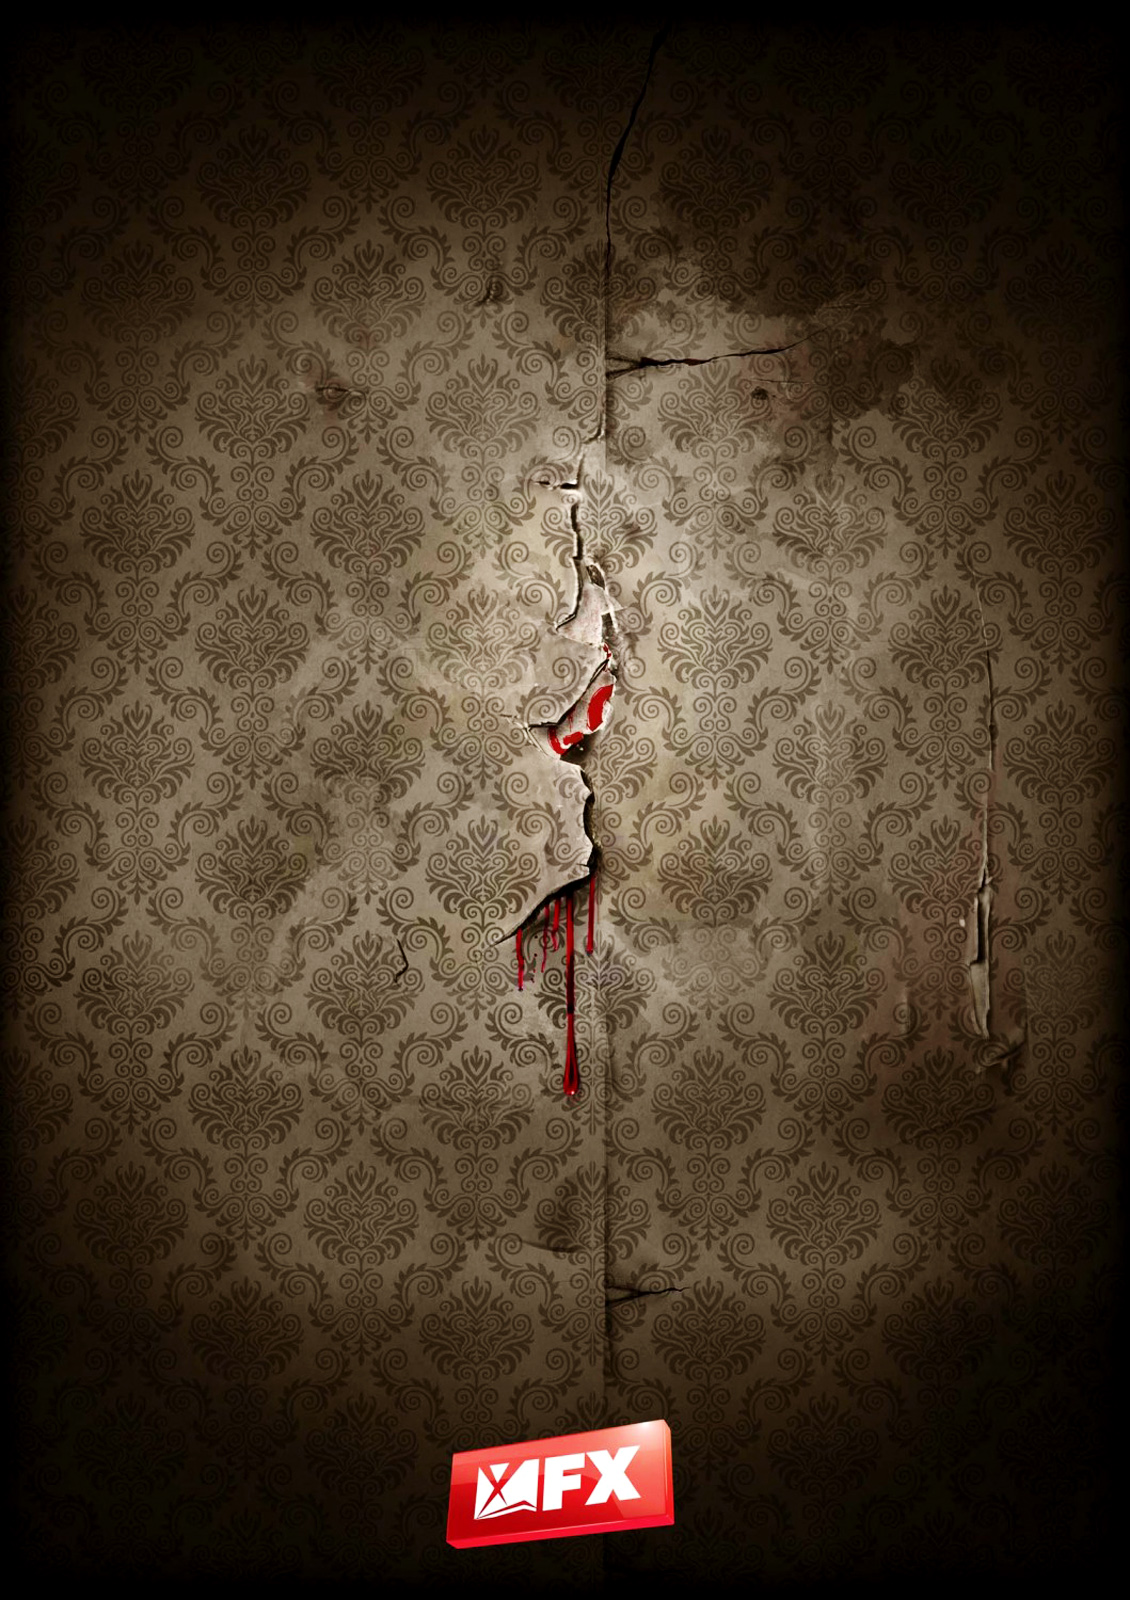 American Horror Story Asylum Tv Series HD Wallpaper Image To